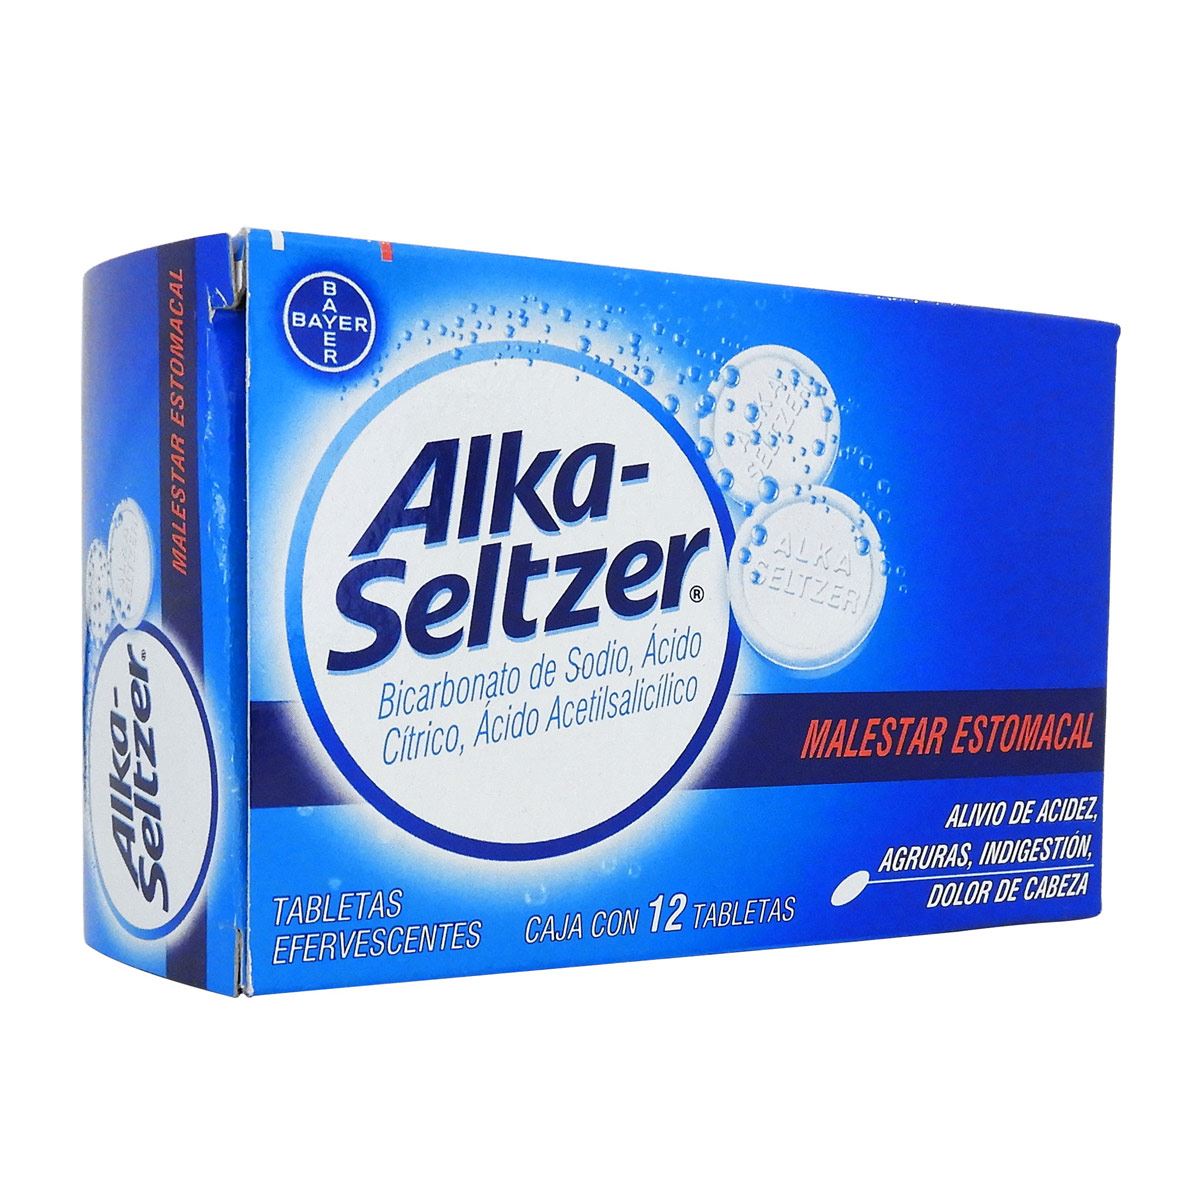 Alka-seltzer para que sirve